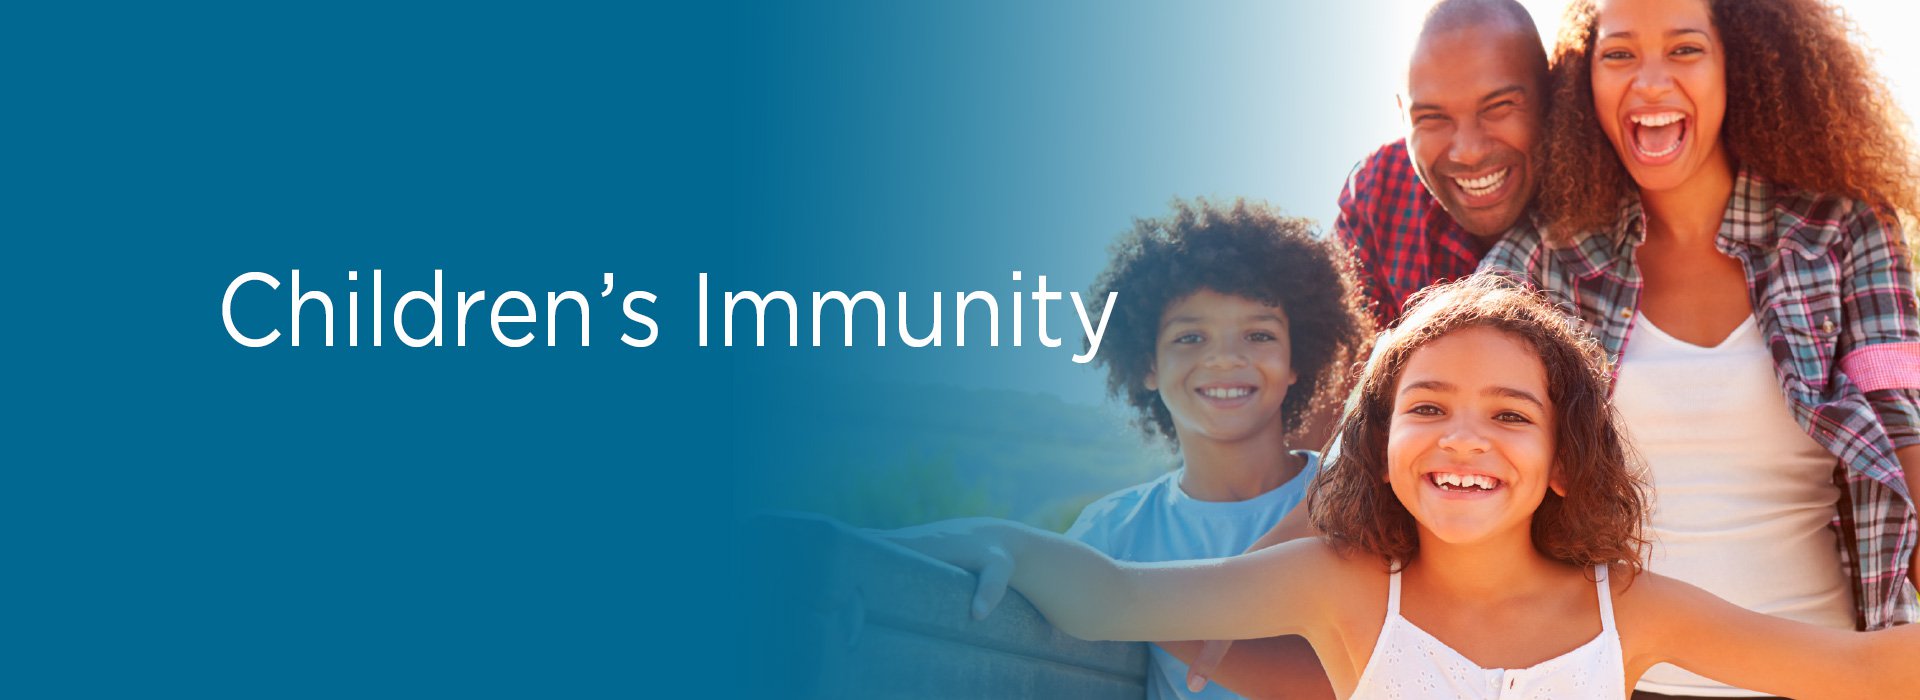 New Image International:Children's Immunity